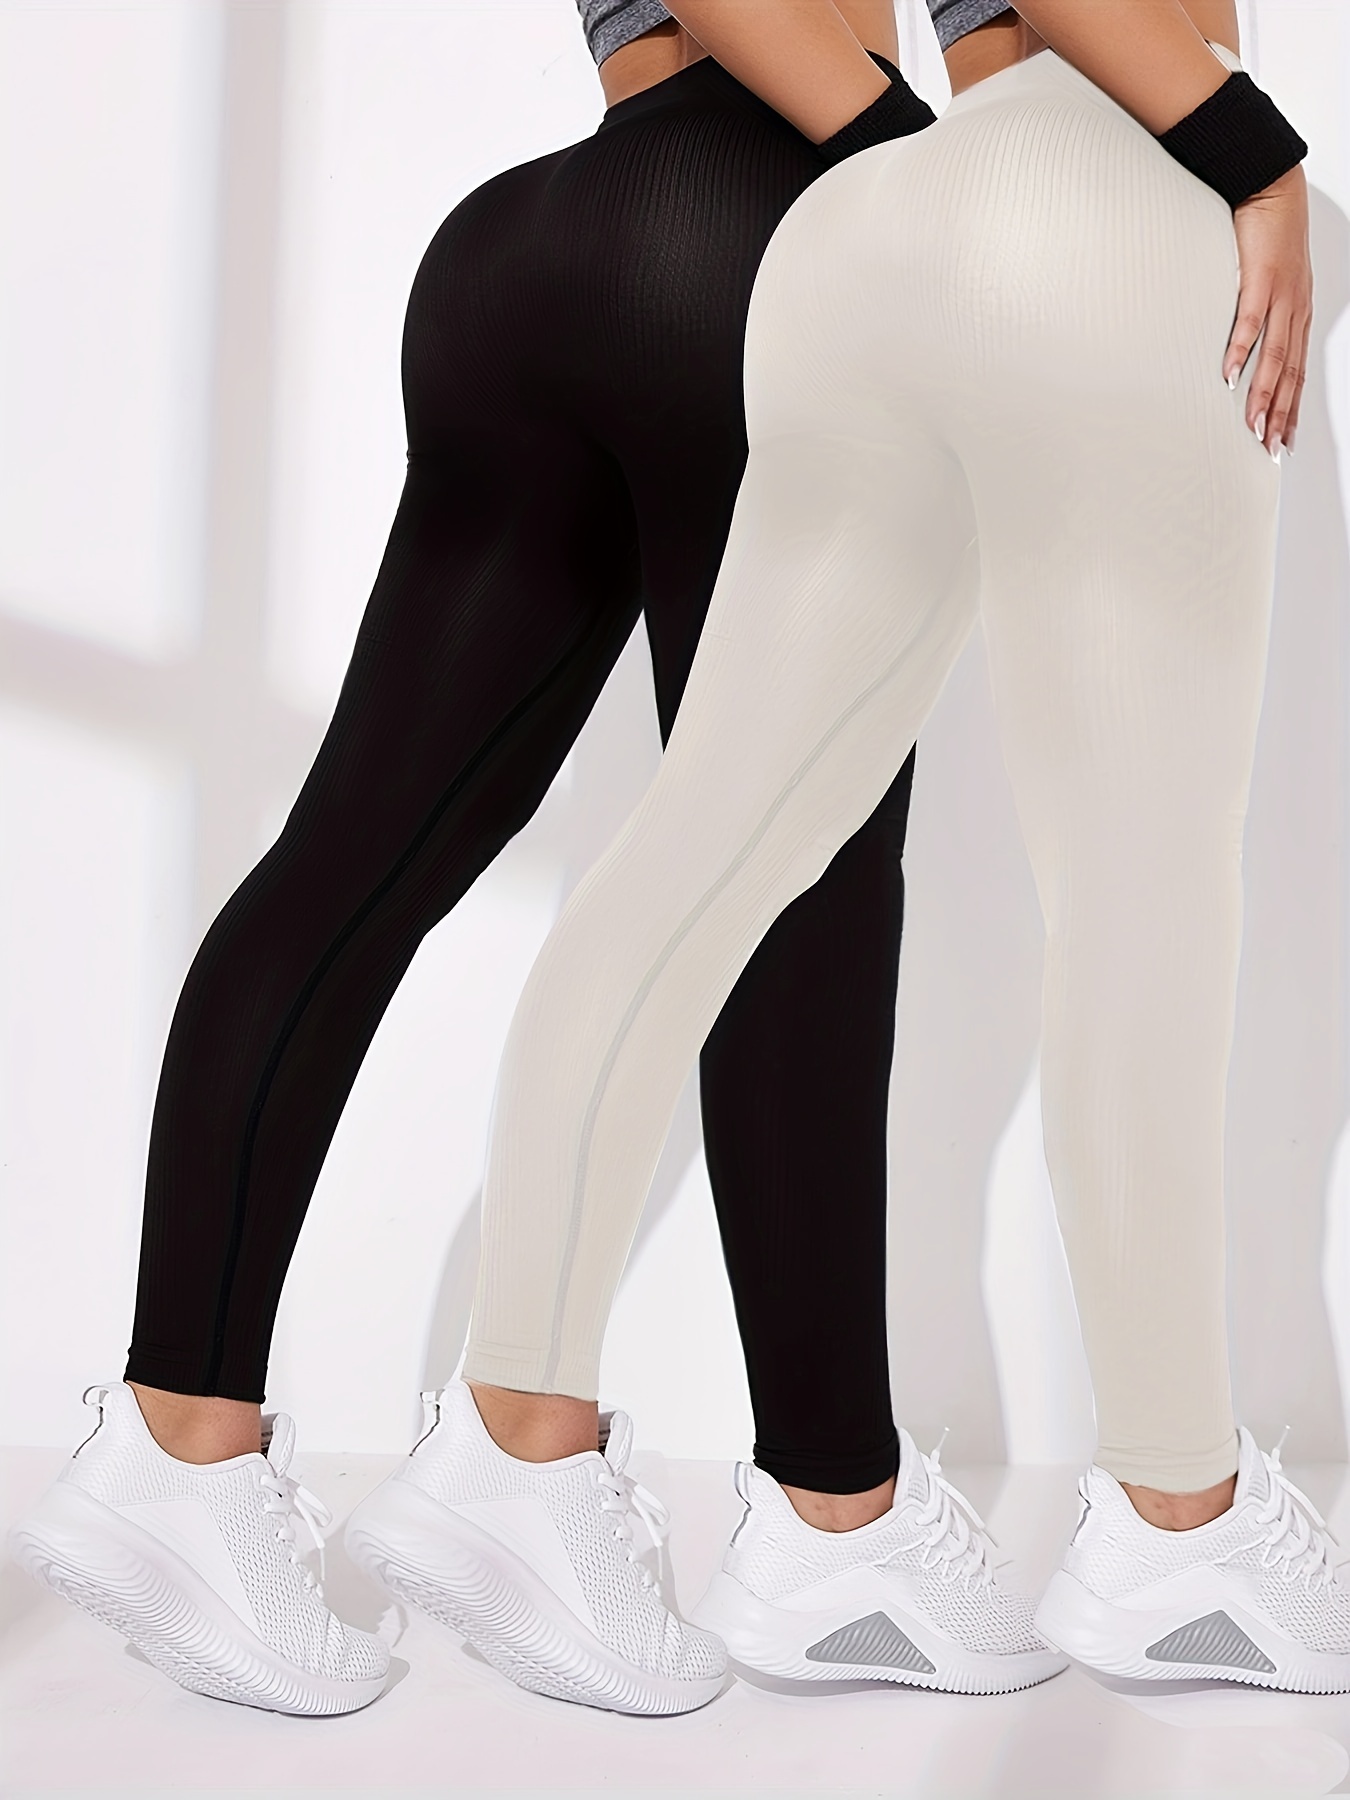 Women's Activewear: Khaki Solid Color Skinny Leggings - Perfect for Yoga,  Running & More!